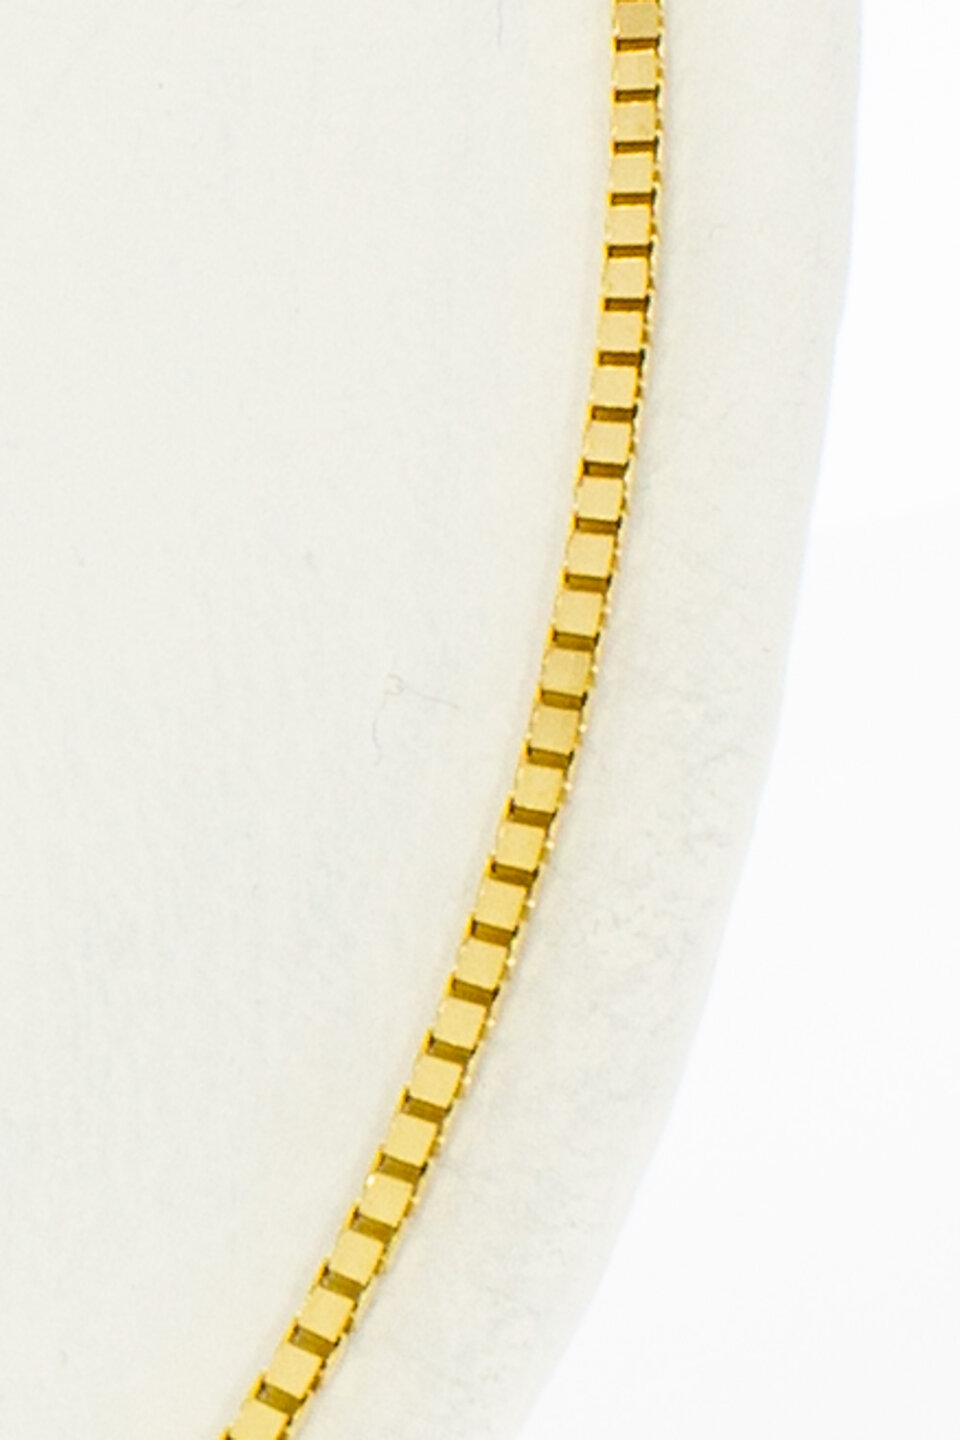 14 Karaat gouden Venetiaanse ketting - 60,4 cm